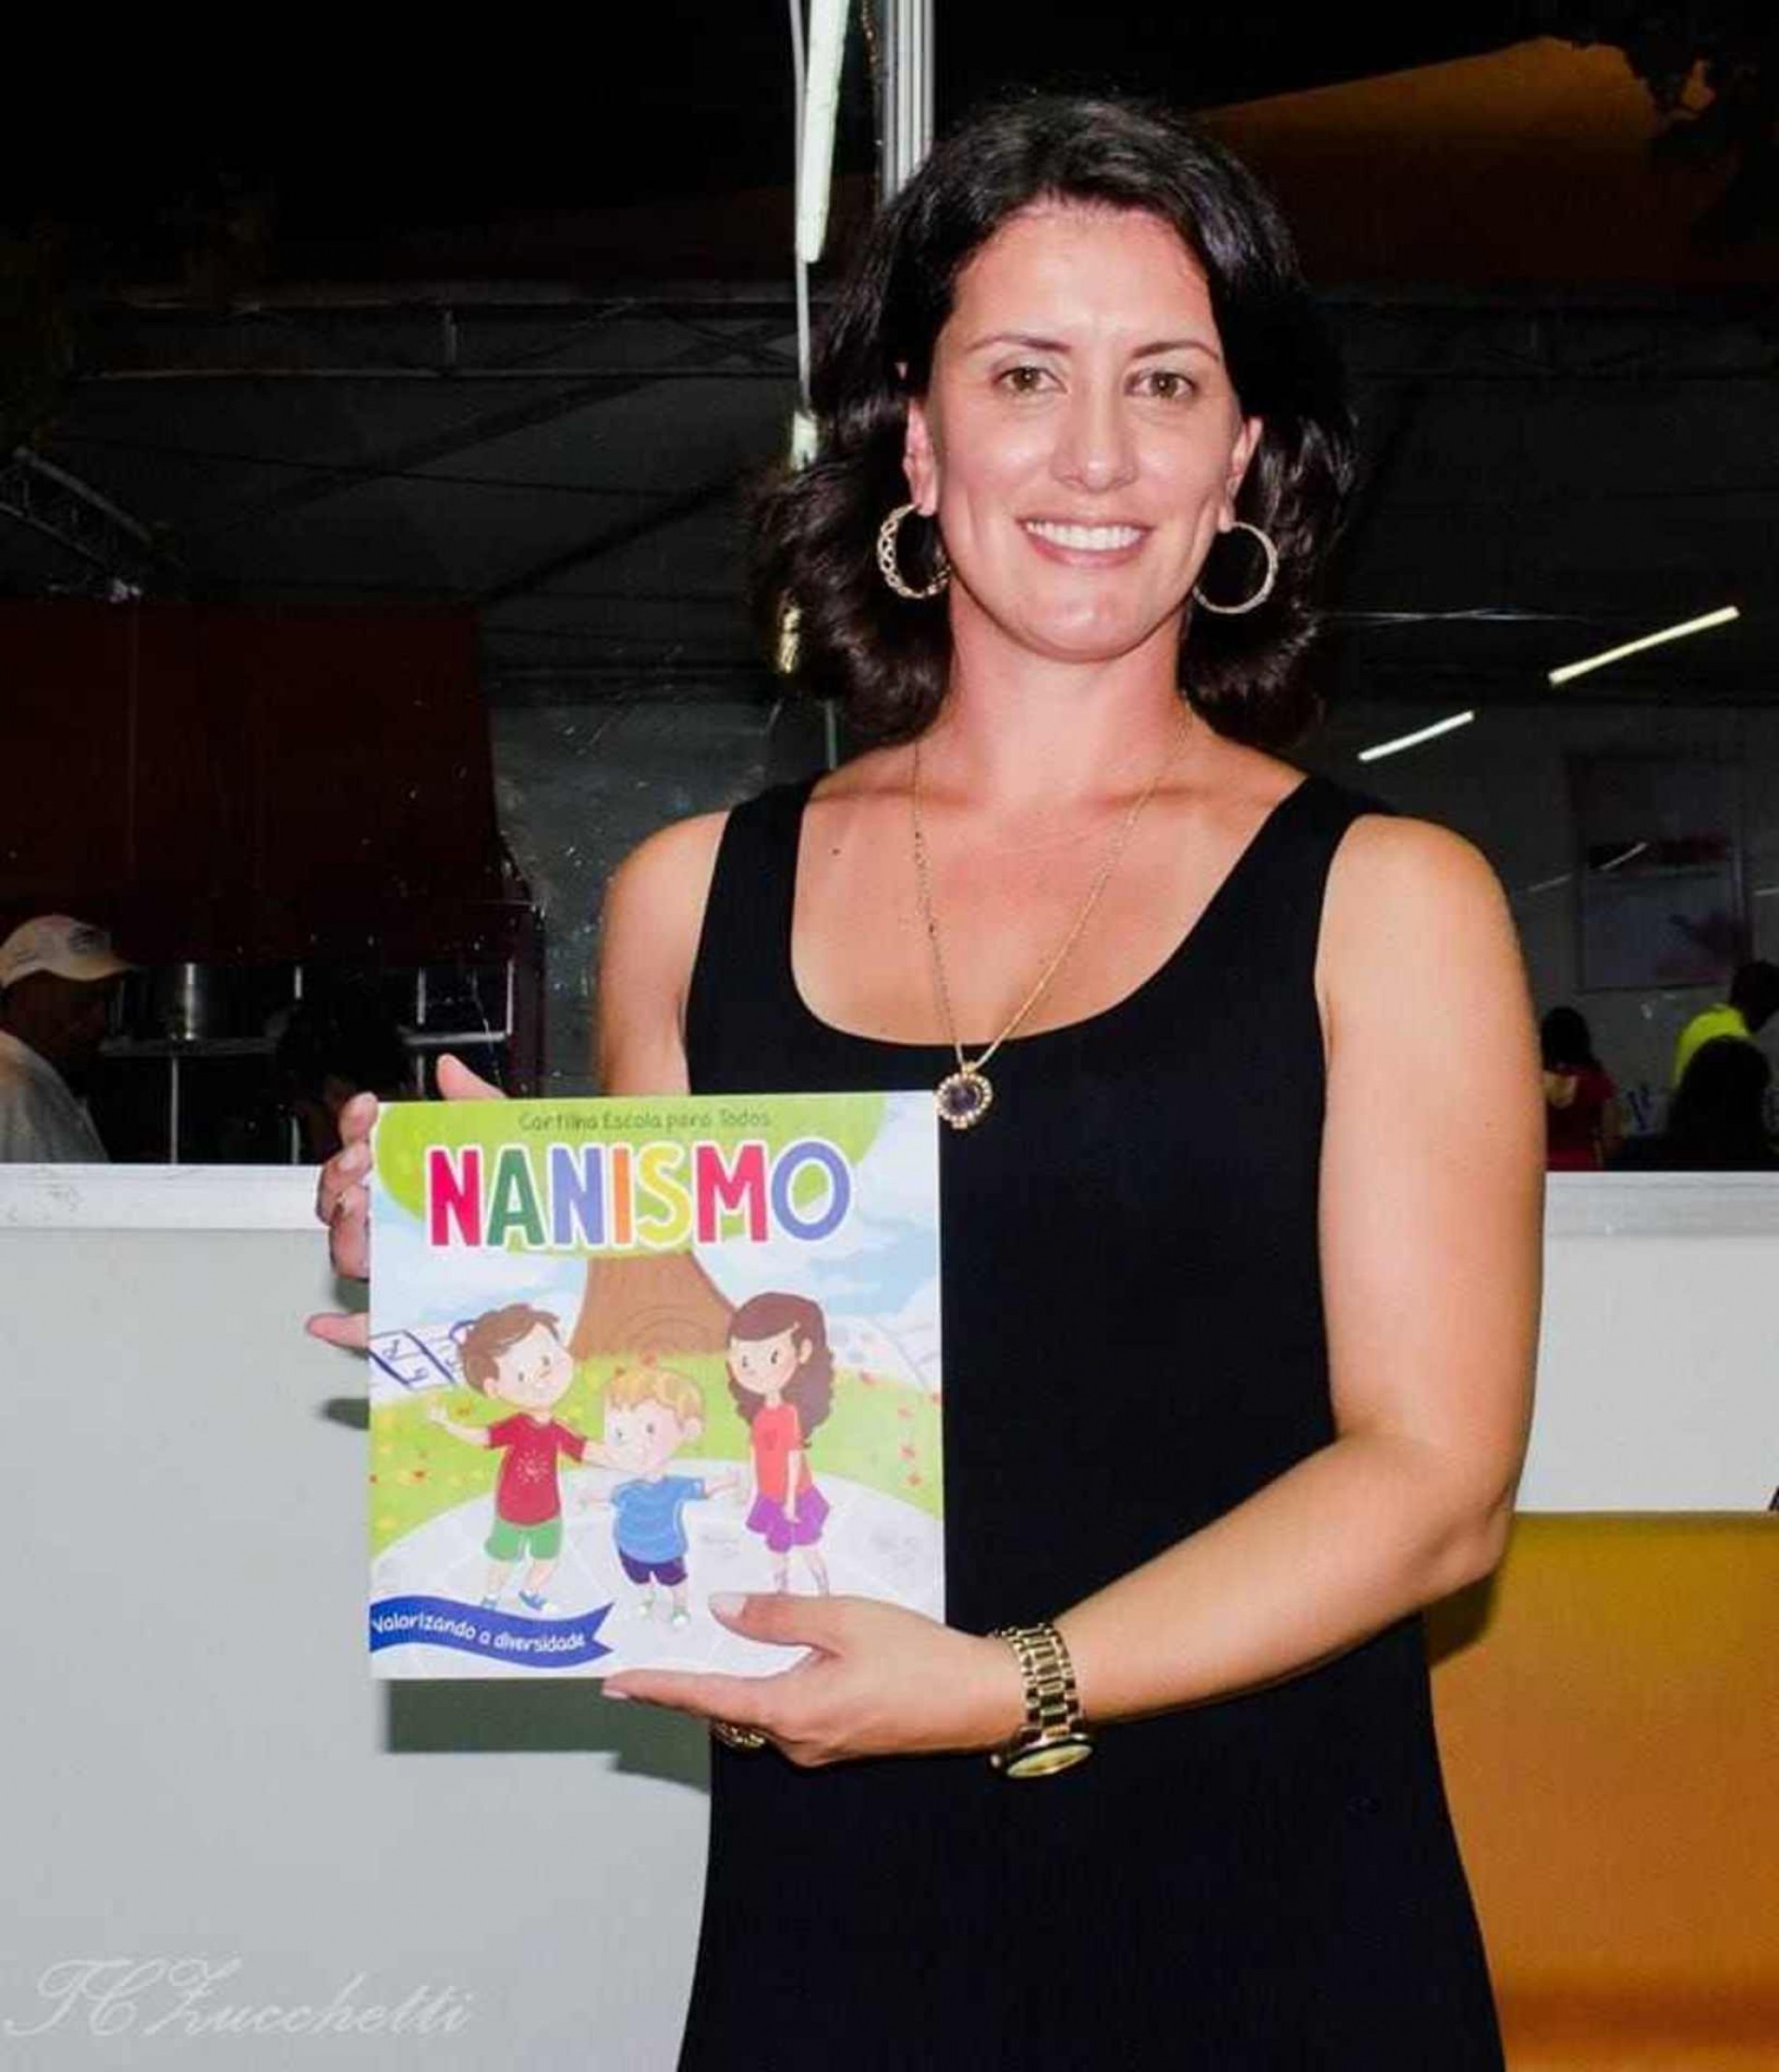 Vélvit Severo, autora da cartilha Escola para Todos Nanismo 